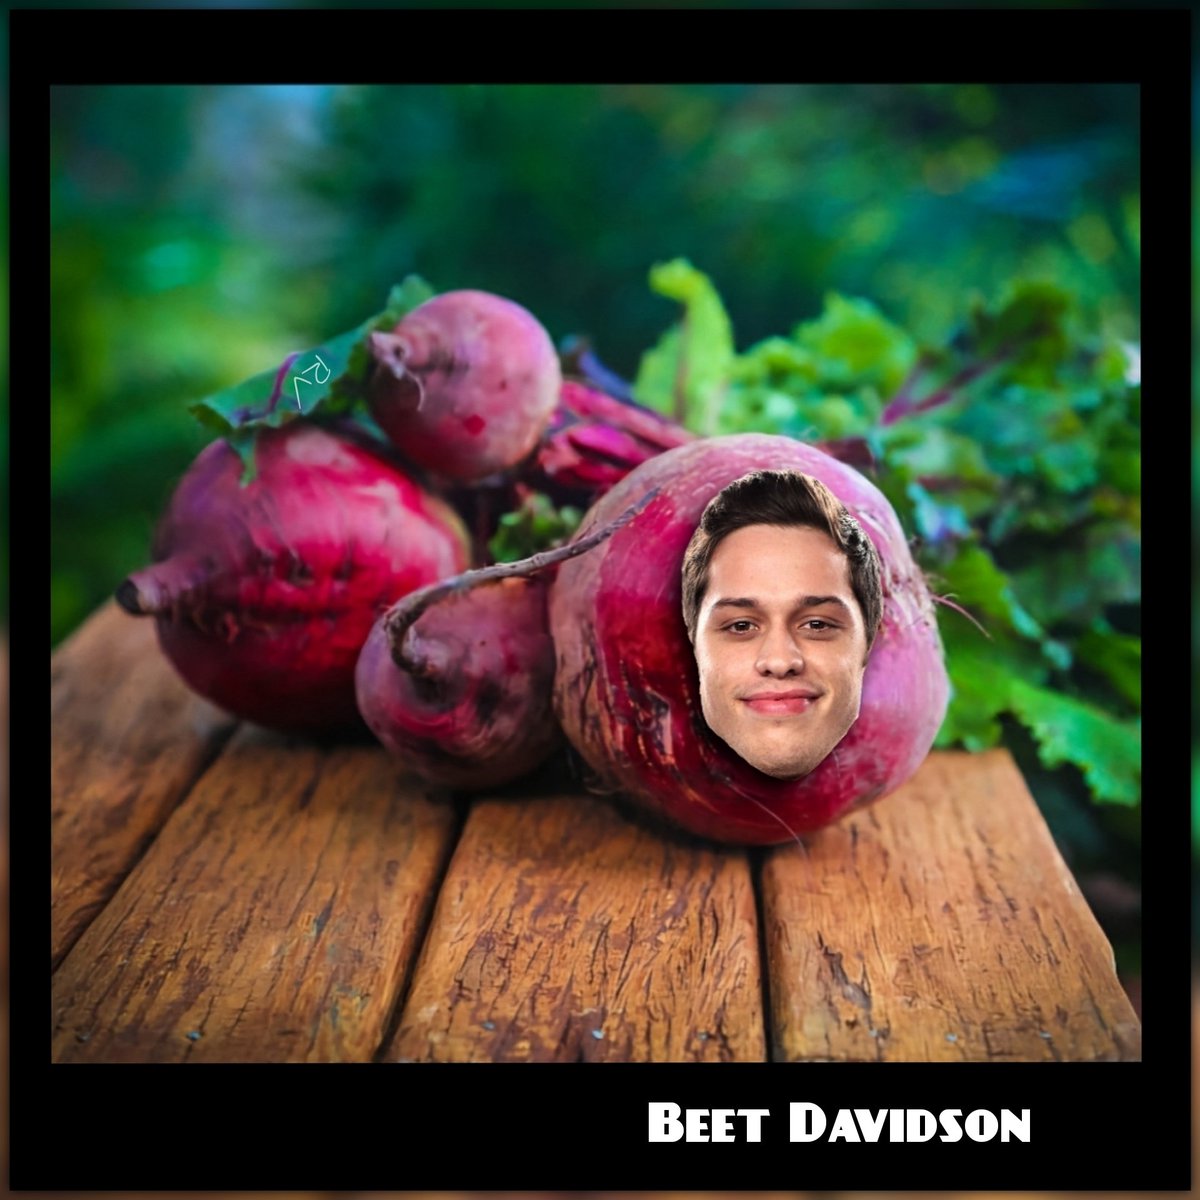 🌱🎤🔴⭐🌱
#petedavidson #beetdavidson #beet #beets #vegetables #food #tubrrs #rootvegetables #snl #saturdaynight #saturdaynightlive #wood #comedy #lol #funny #pun #smiling #humor #memes #comedian #parody #meme #art #actor